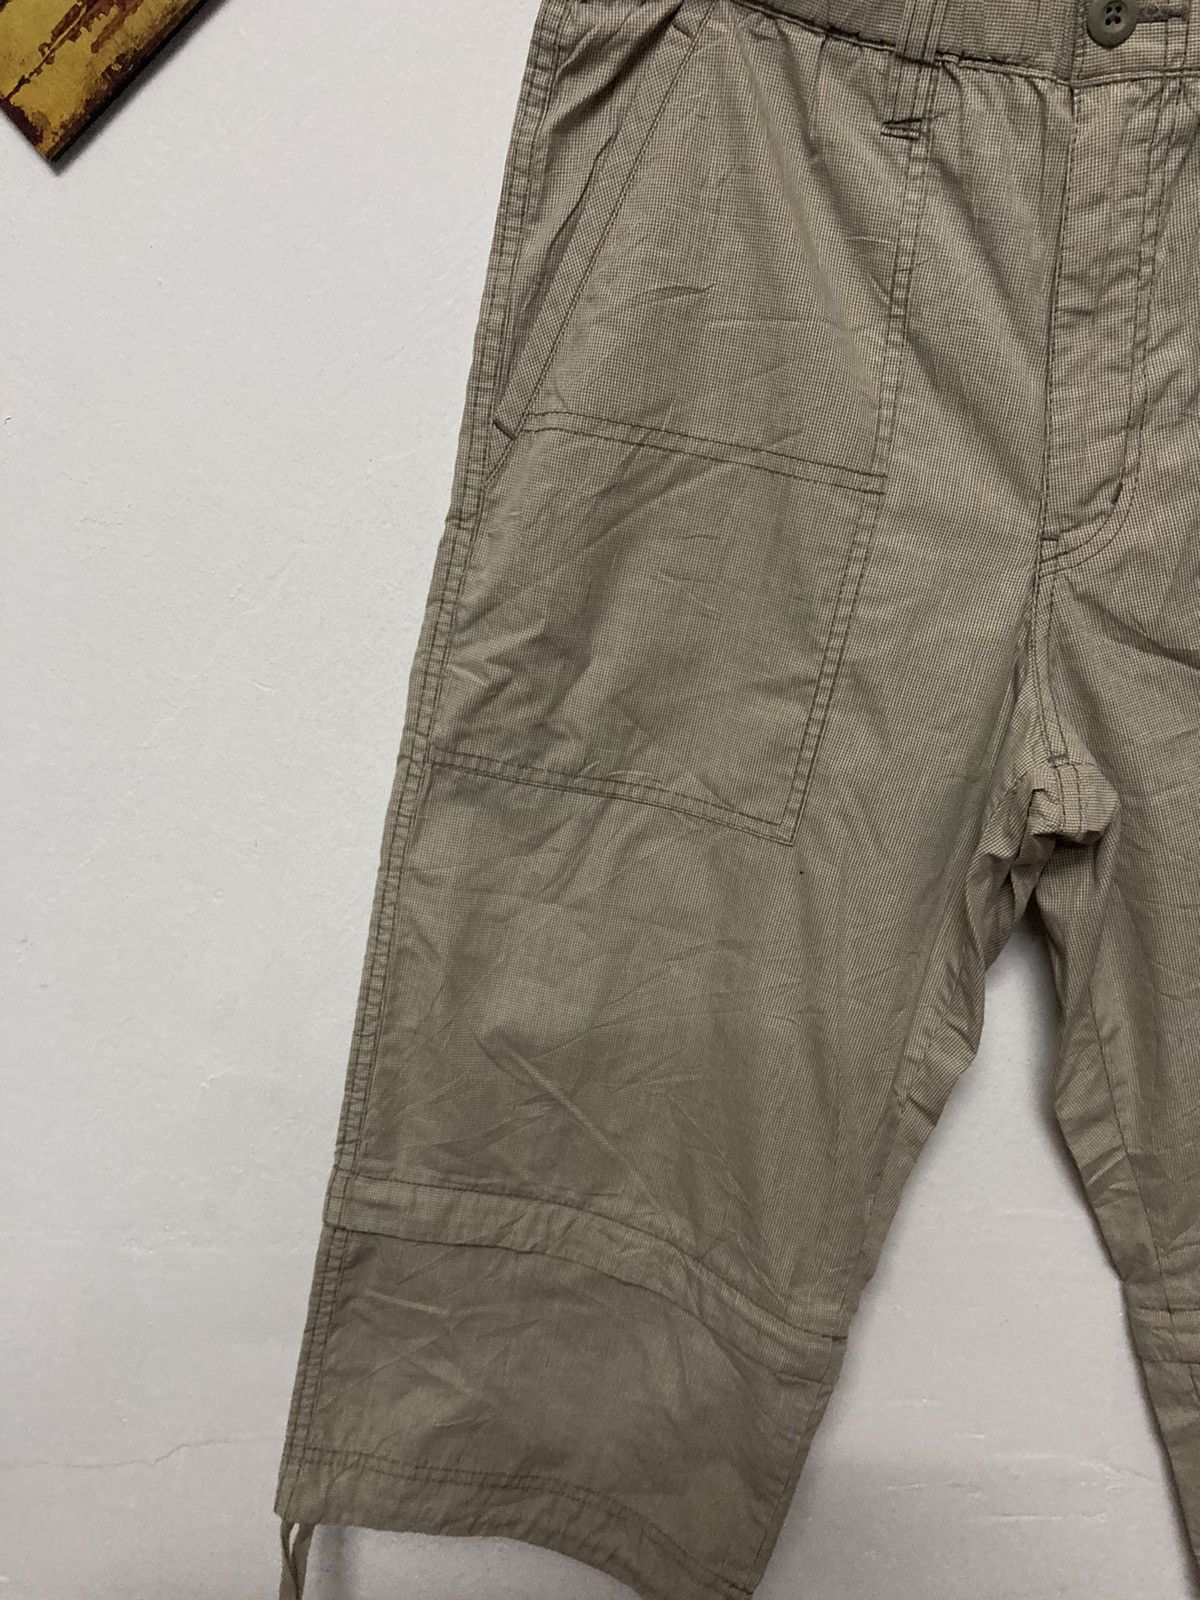 Vintage Uniqlo 3 Quarter Drawstring Pant Size Up to 32 - 7